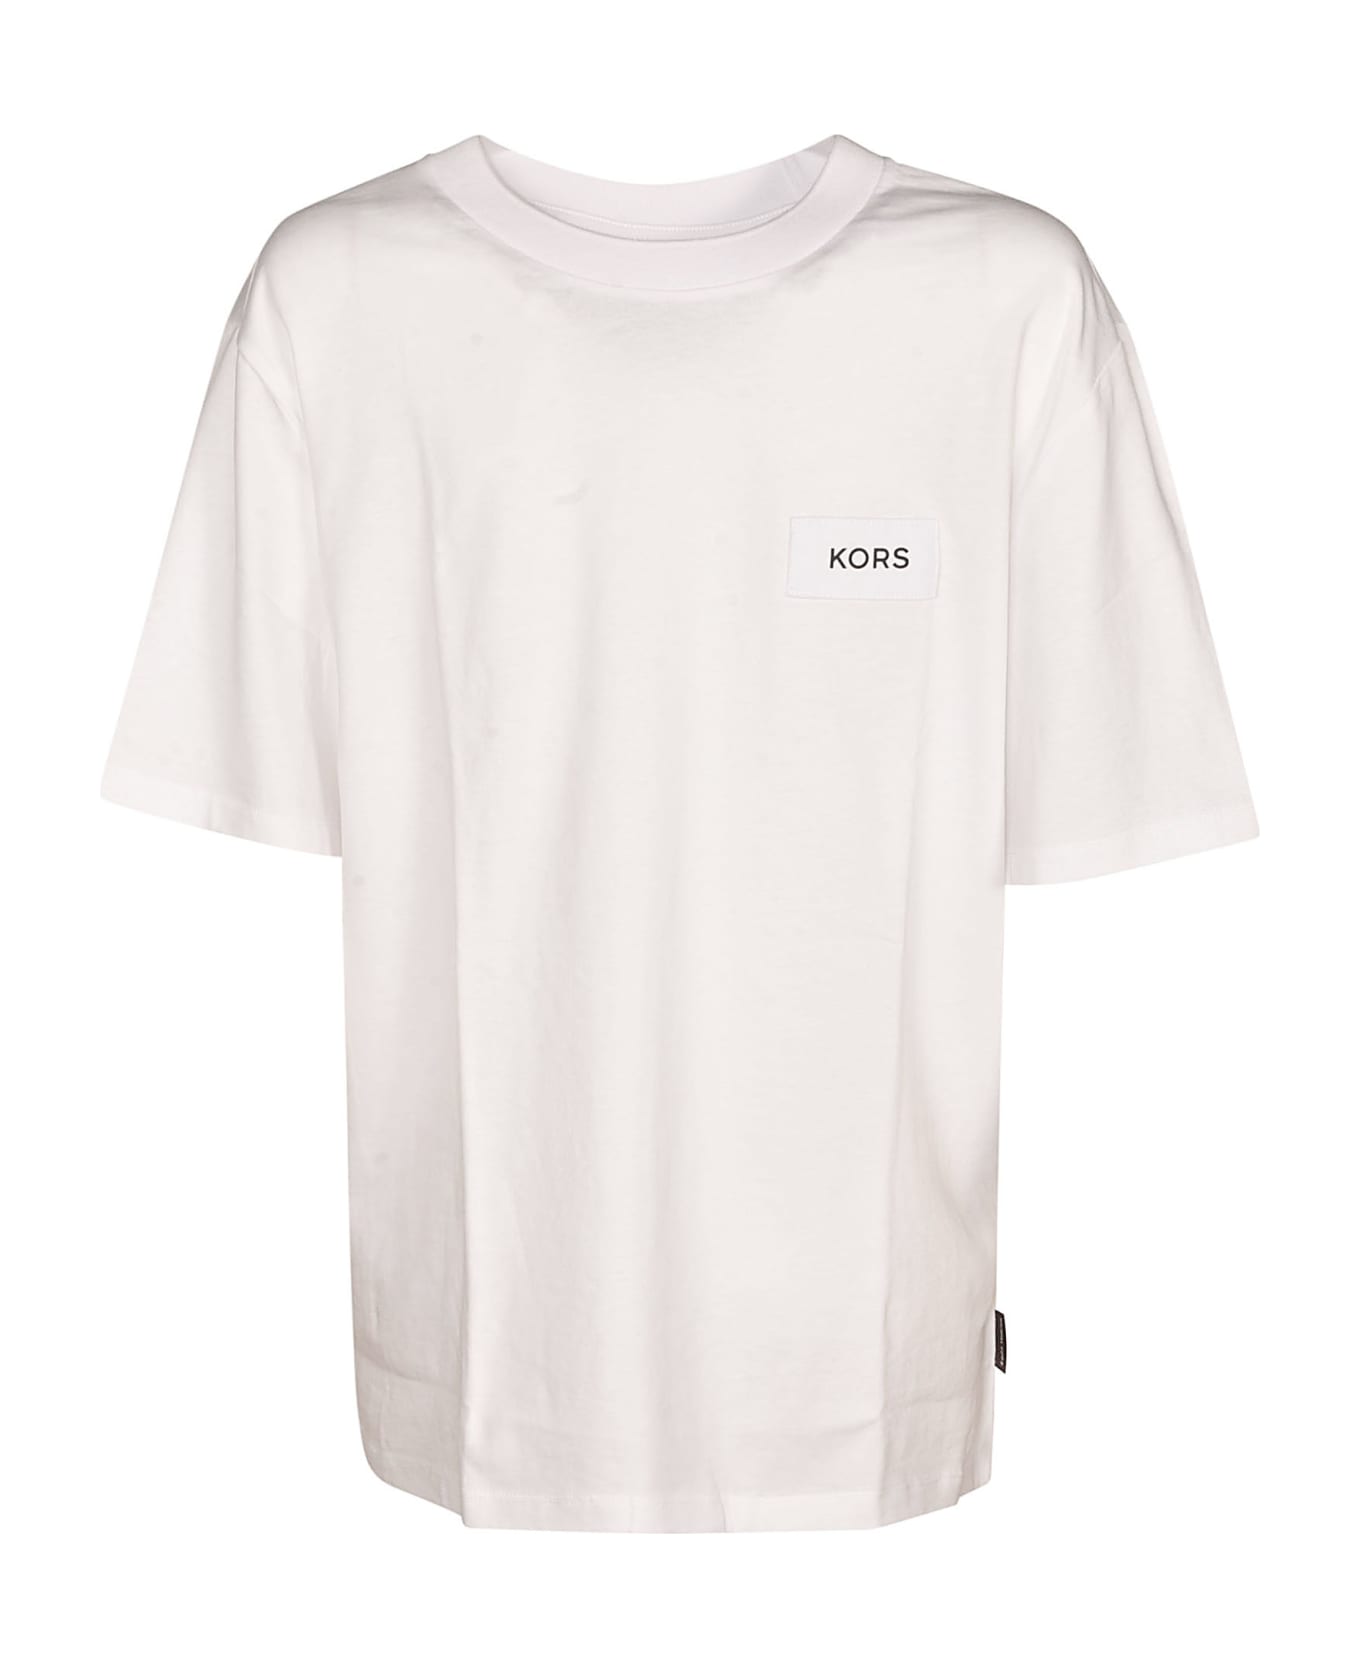 Michael Kors Logo Round Neck T-shirt - White